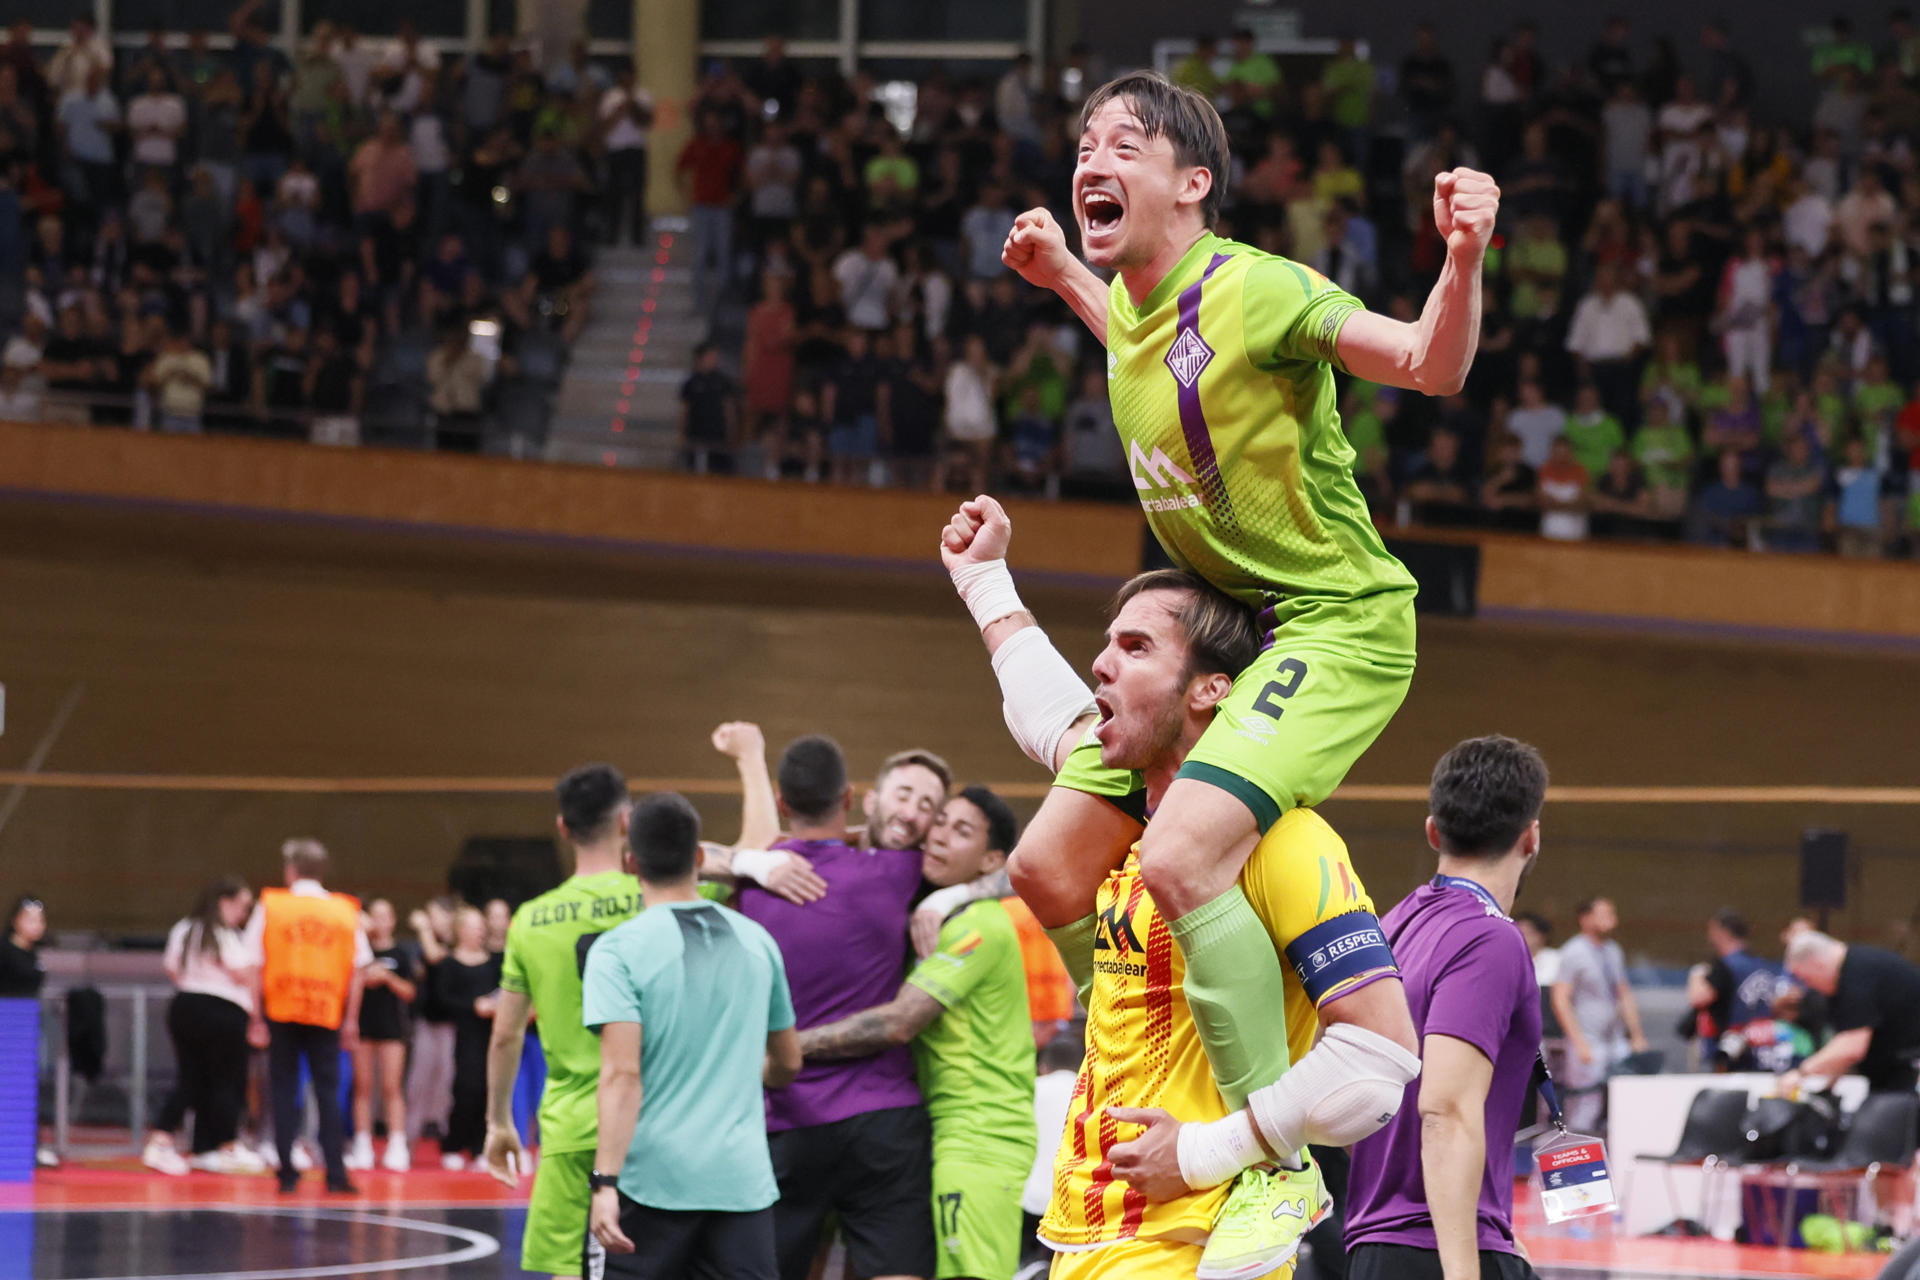 El ala del Mallorca Palma Futsal Bruno Rocha Braga "Chaguinha" (arriba) celebra la victoria ante el Sporting de Lisboa, al término de la final de la Liga de Campeones de fútbol sala disputada este domingo en el Palma Arena. EFE/Cati Cladera
